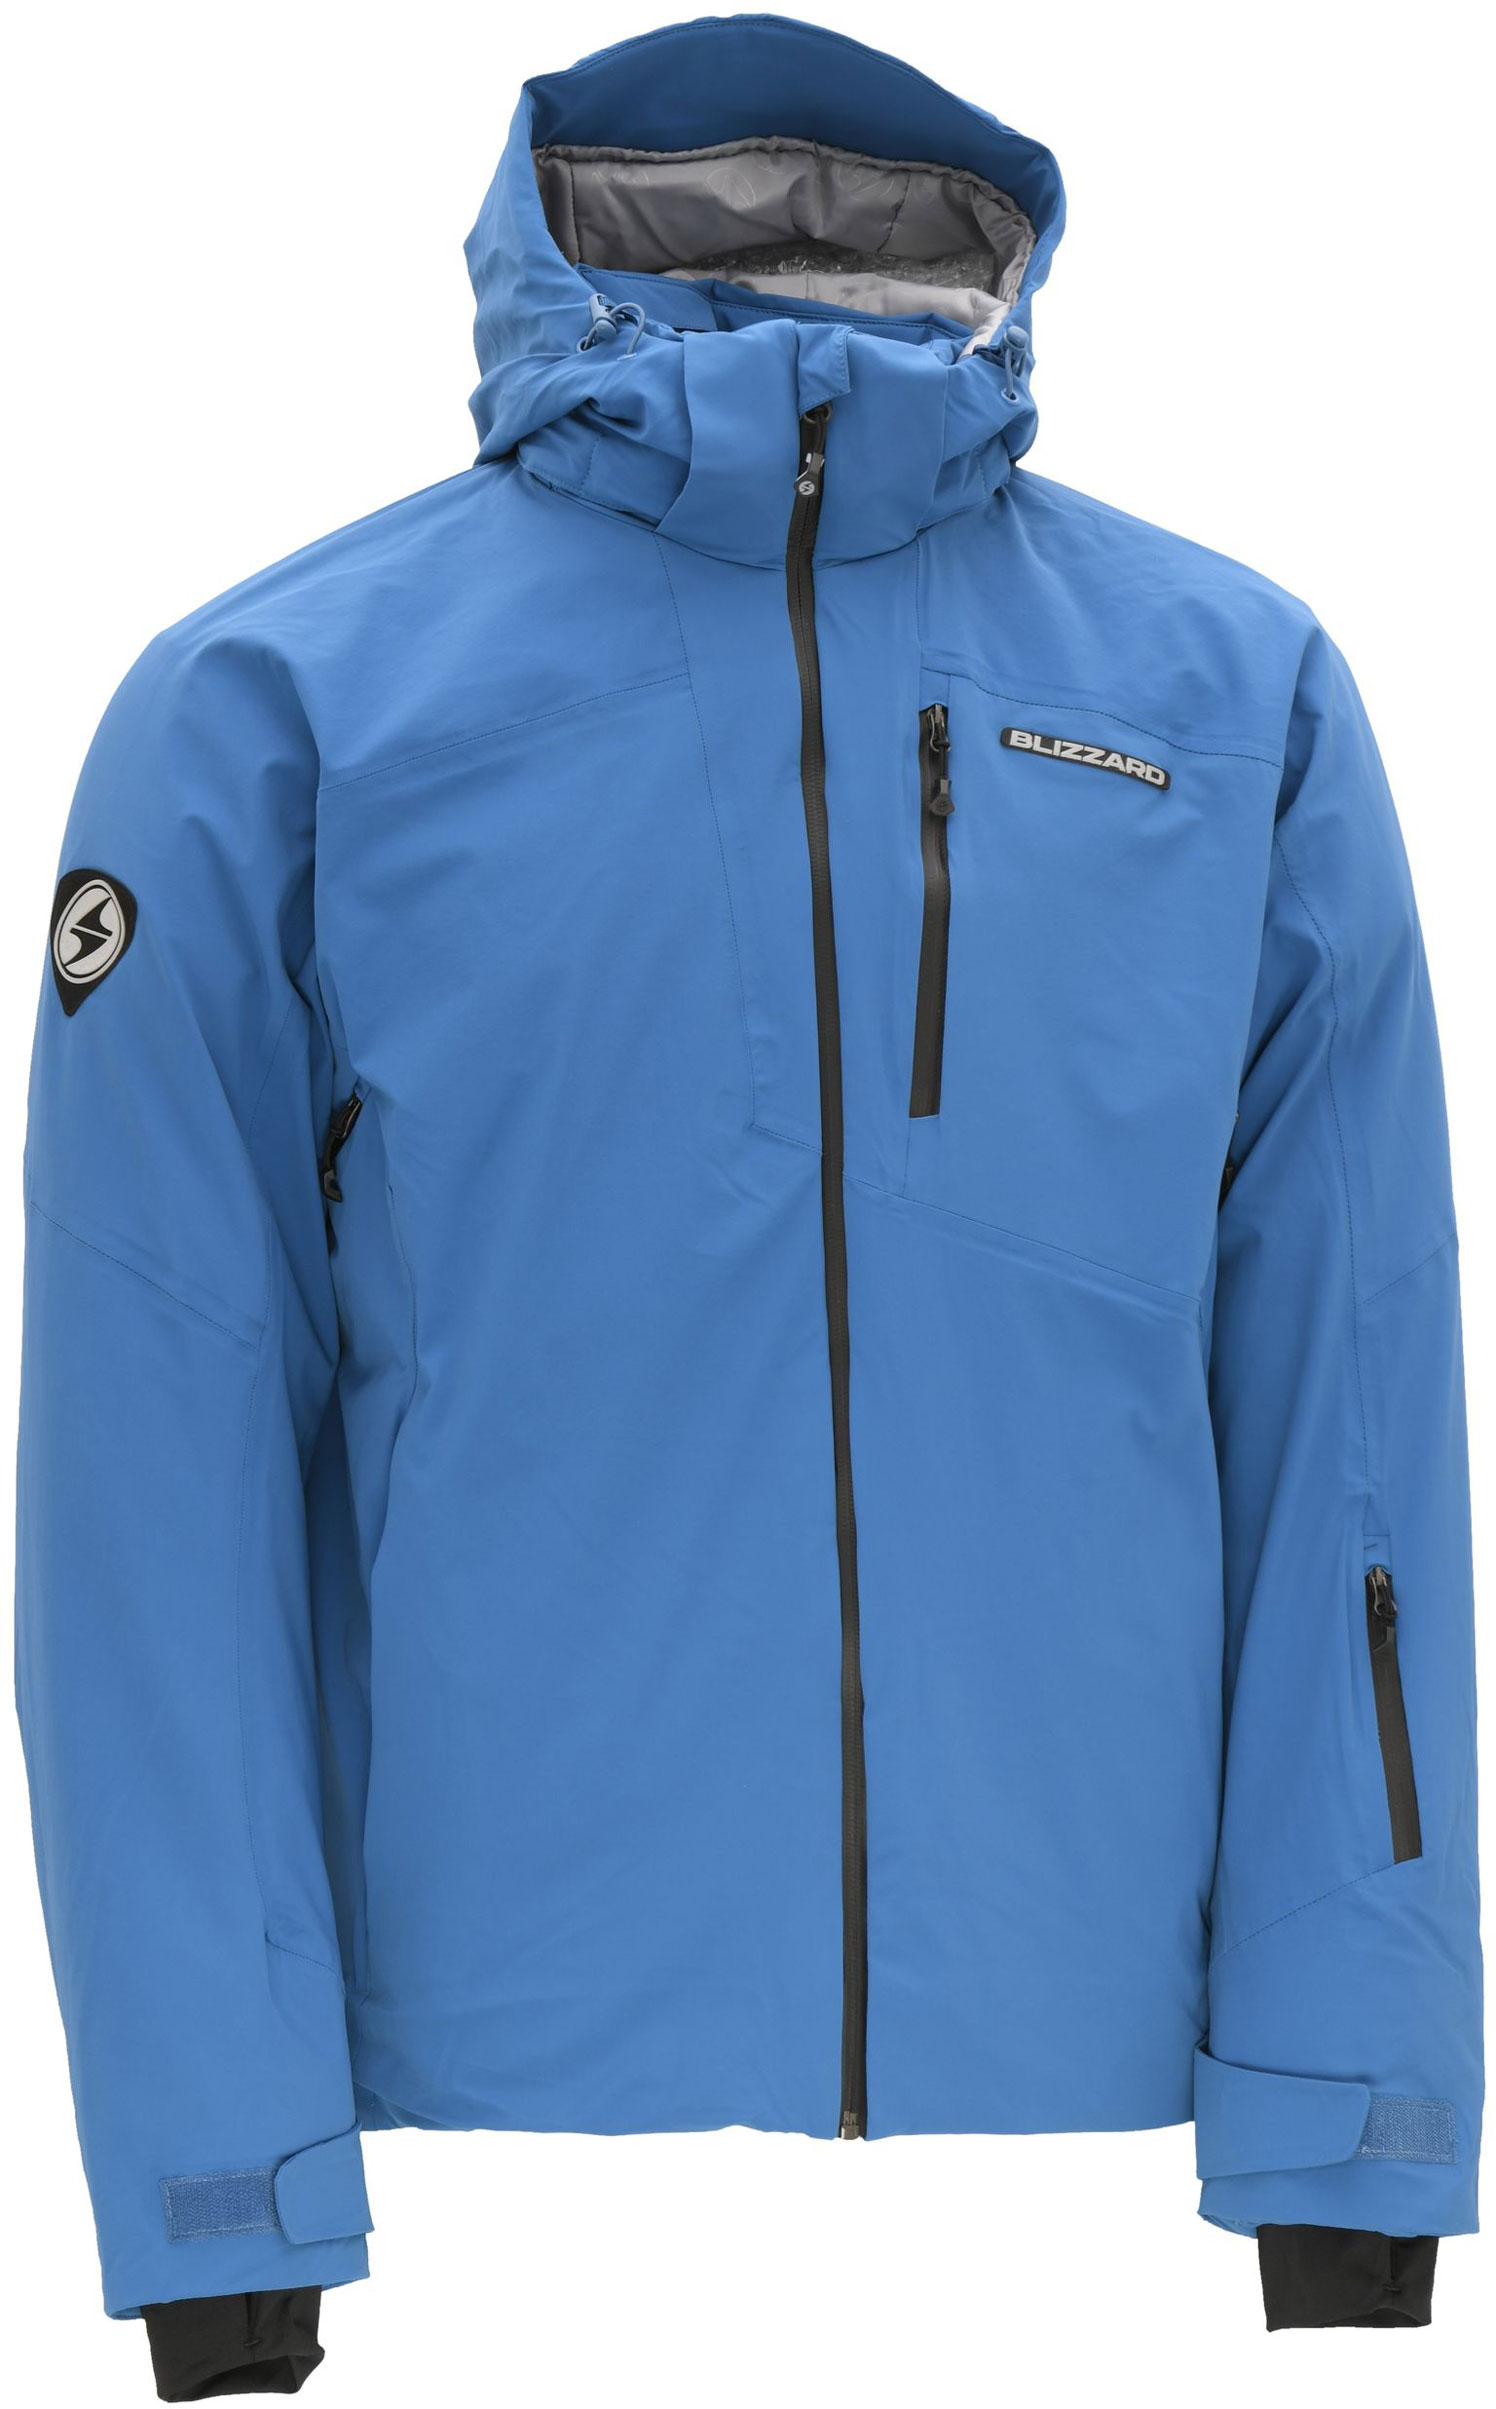 Куртка горнолыжная Blizzard Ski Jacket Silvretta Petroleum куртка горнолыжная blizzard ski jacket leogang petroleum mustard